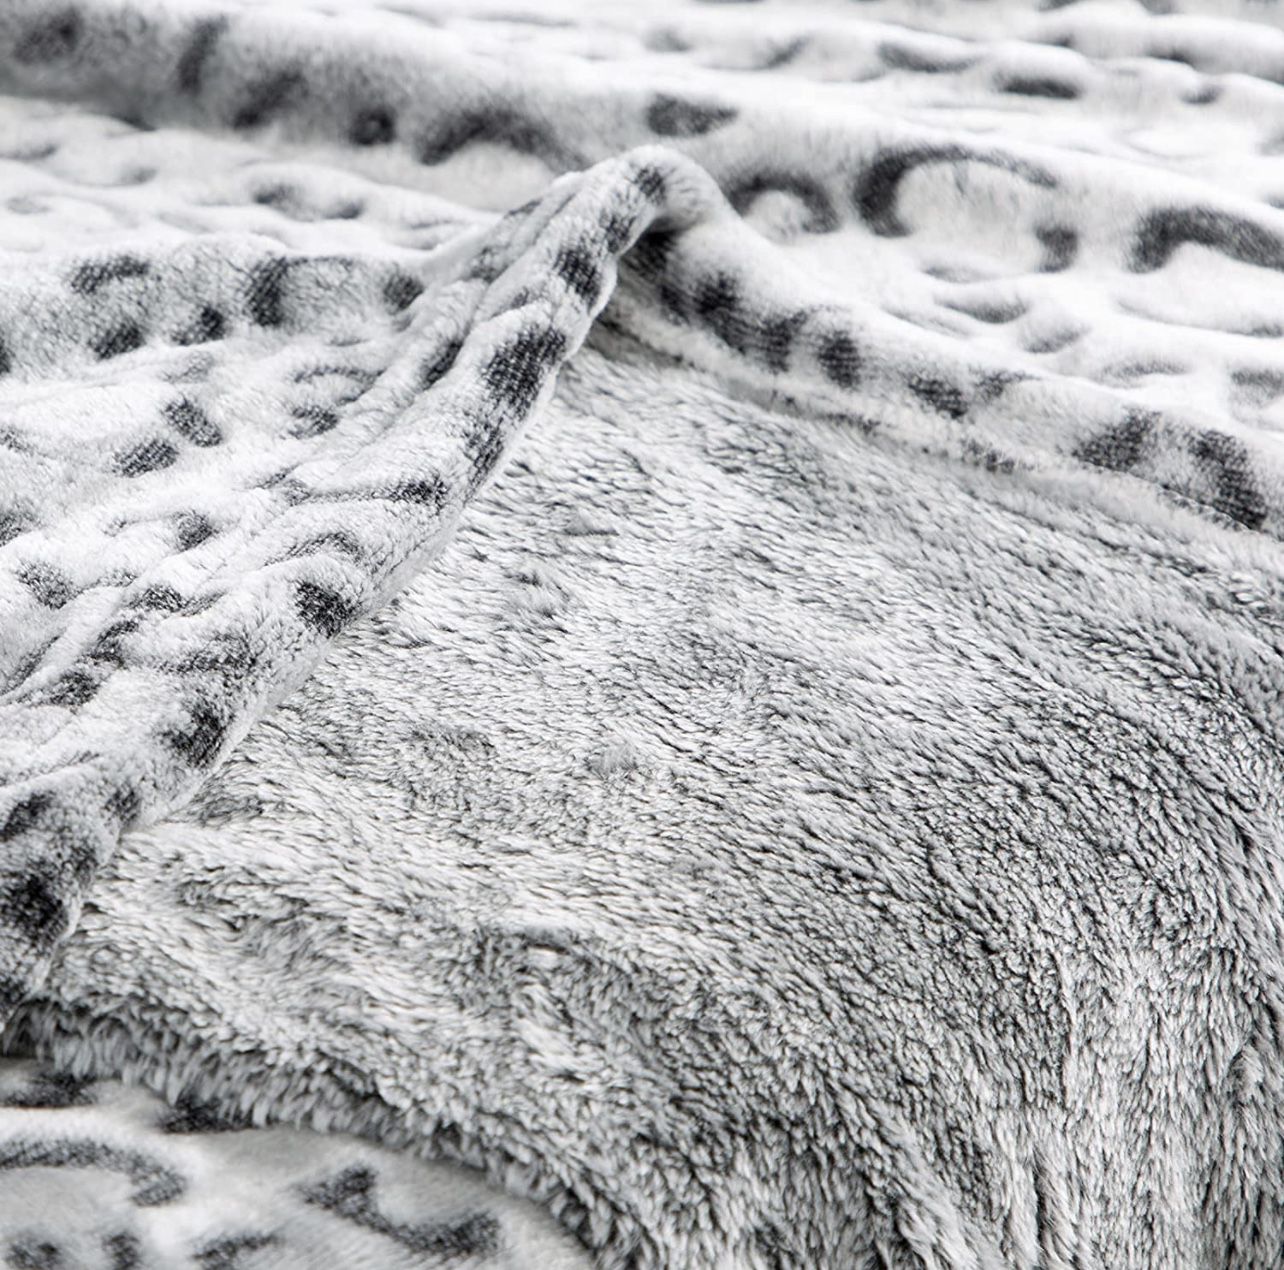 Flannel Fleece Throw Blanket for Couch Fuzzy 3D Cheetah Blanket Lightweight Warm Cozy Comfy Super Soft Leopard Blanket for Bed Sofa 260GSM (Black Leop